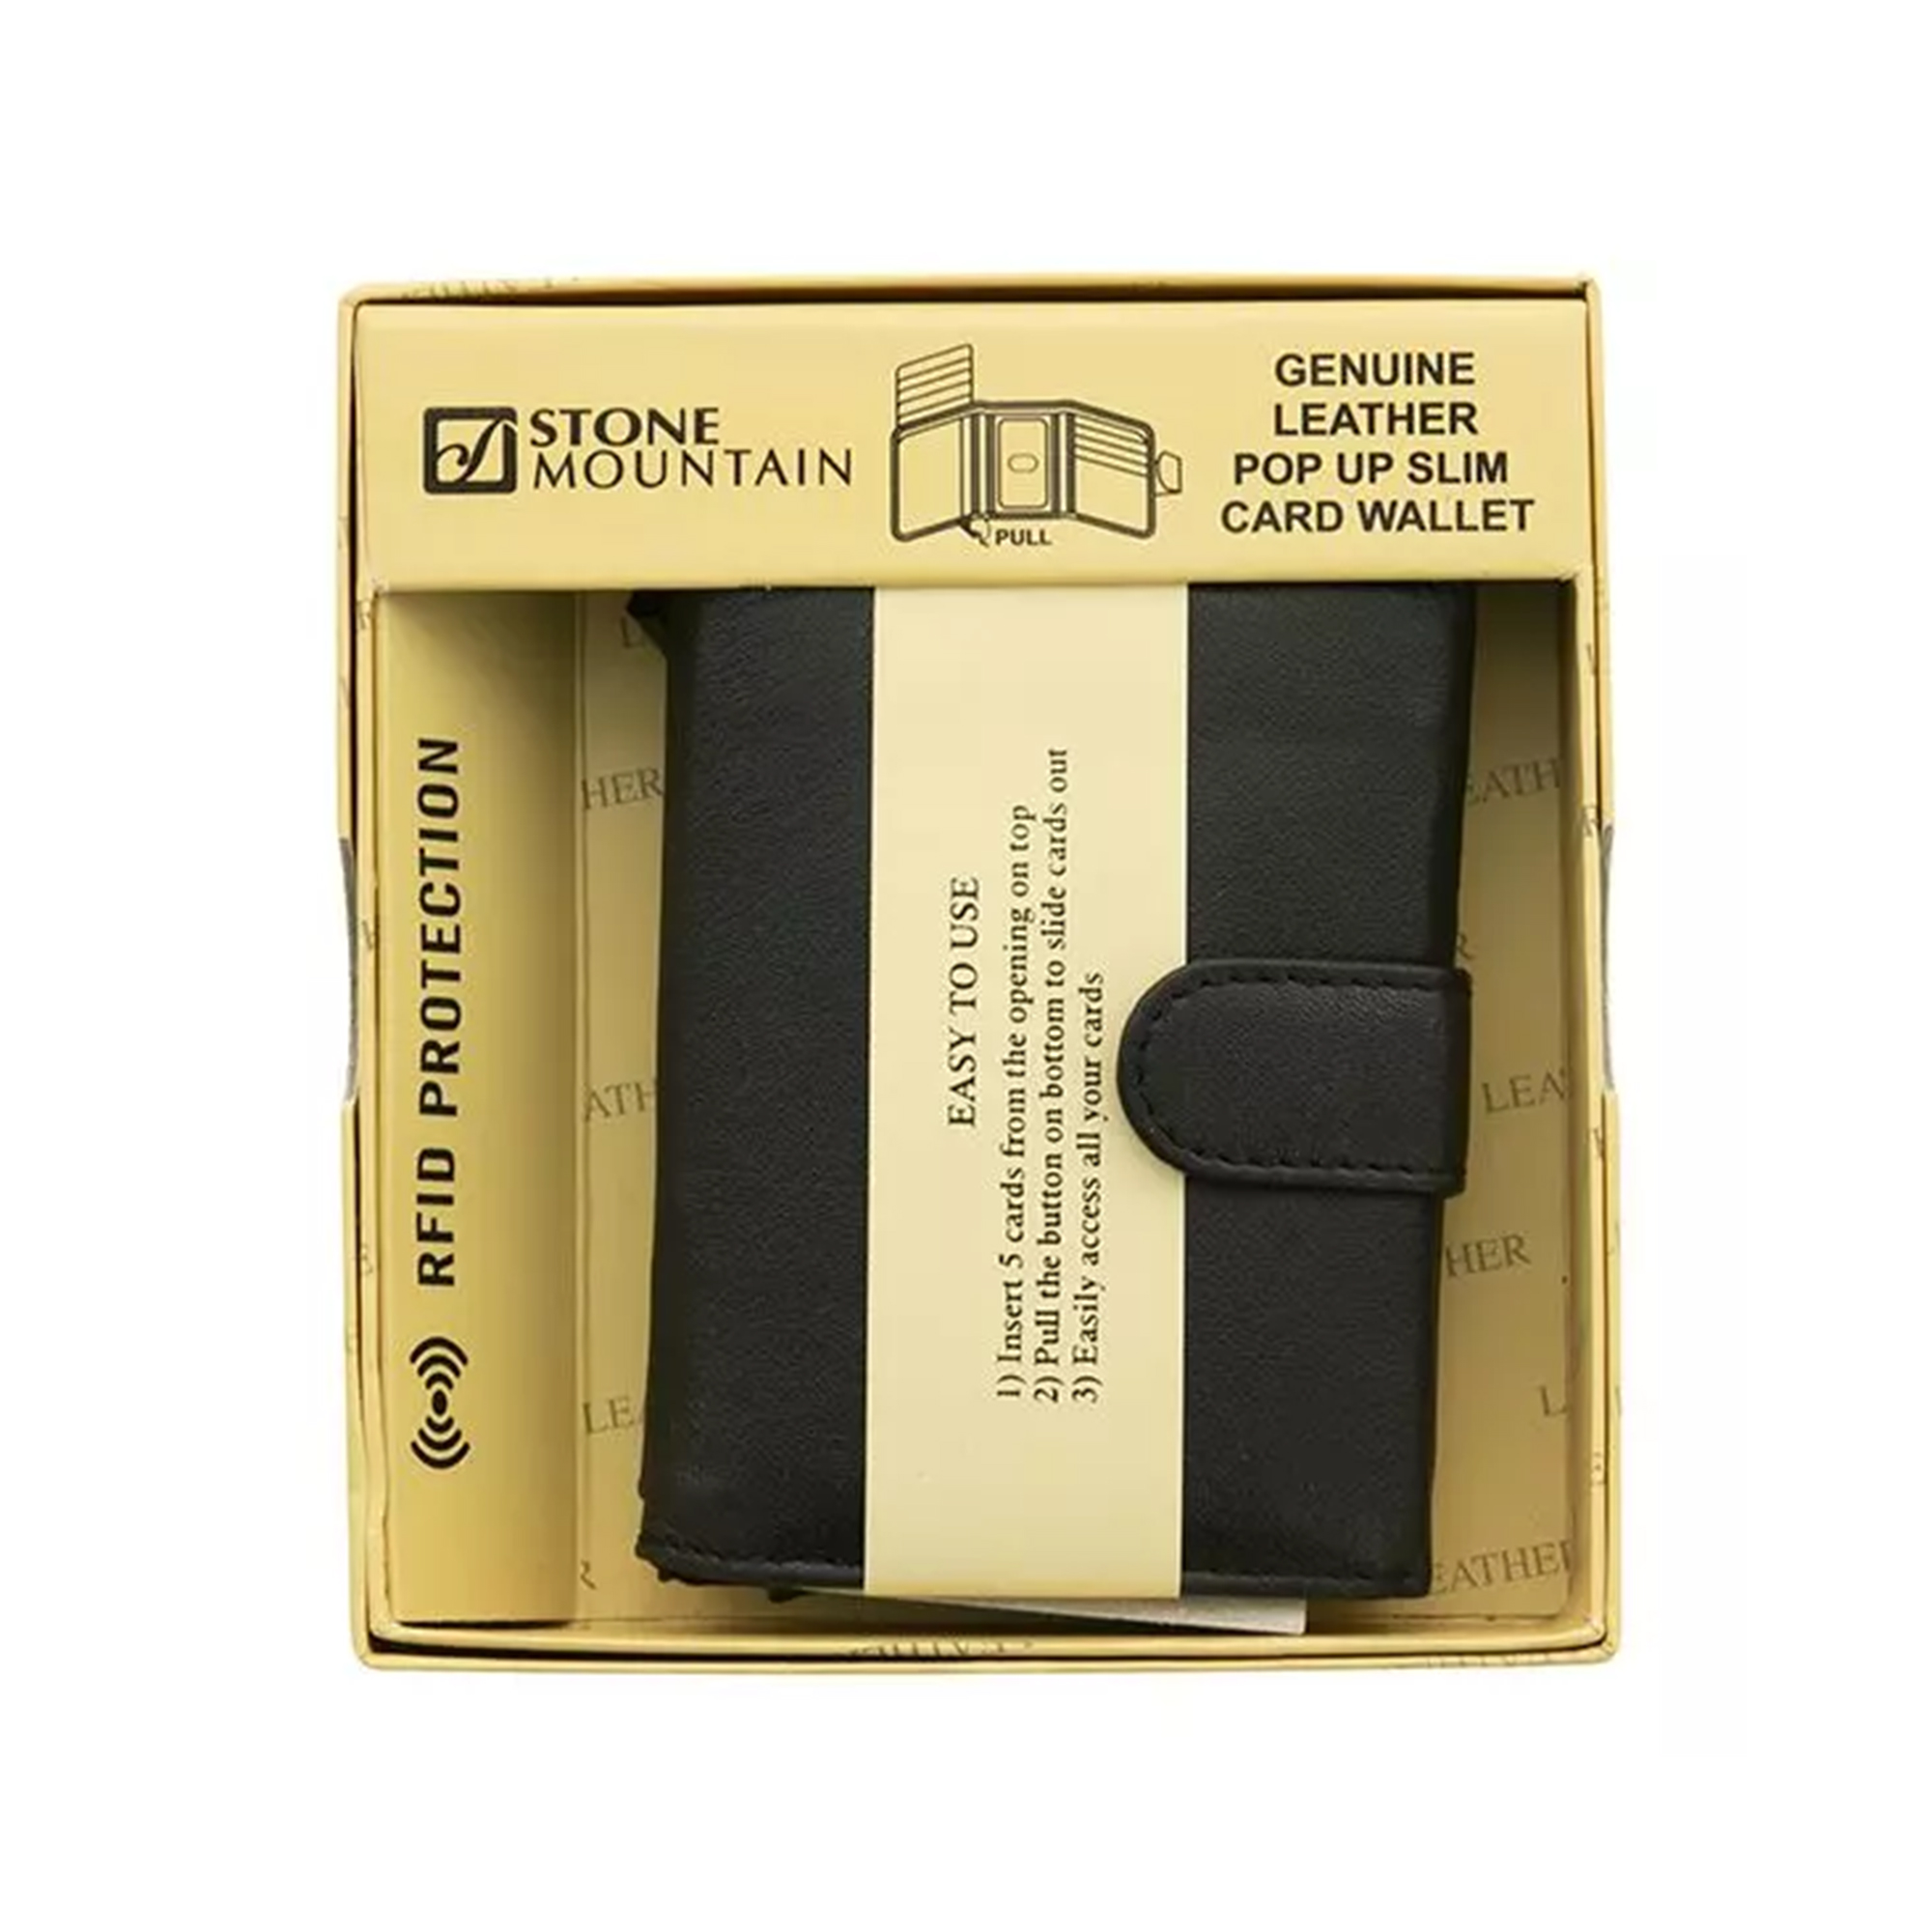 Stone Mountain Genuine Leather Pop Up Slim RFID Wallet, Black